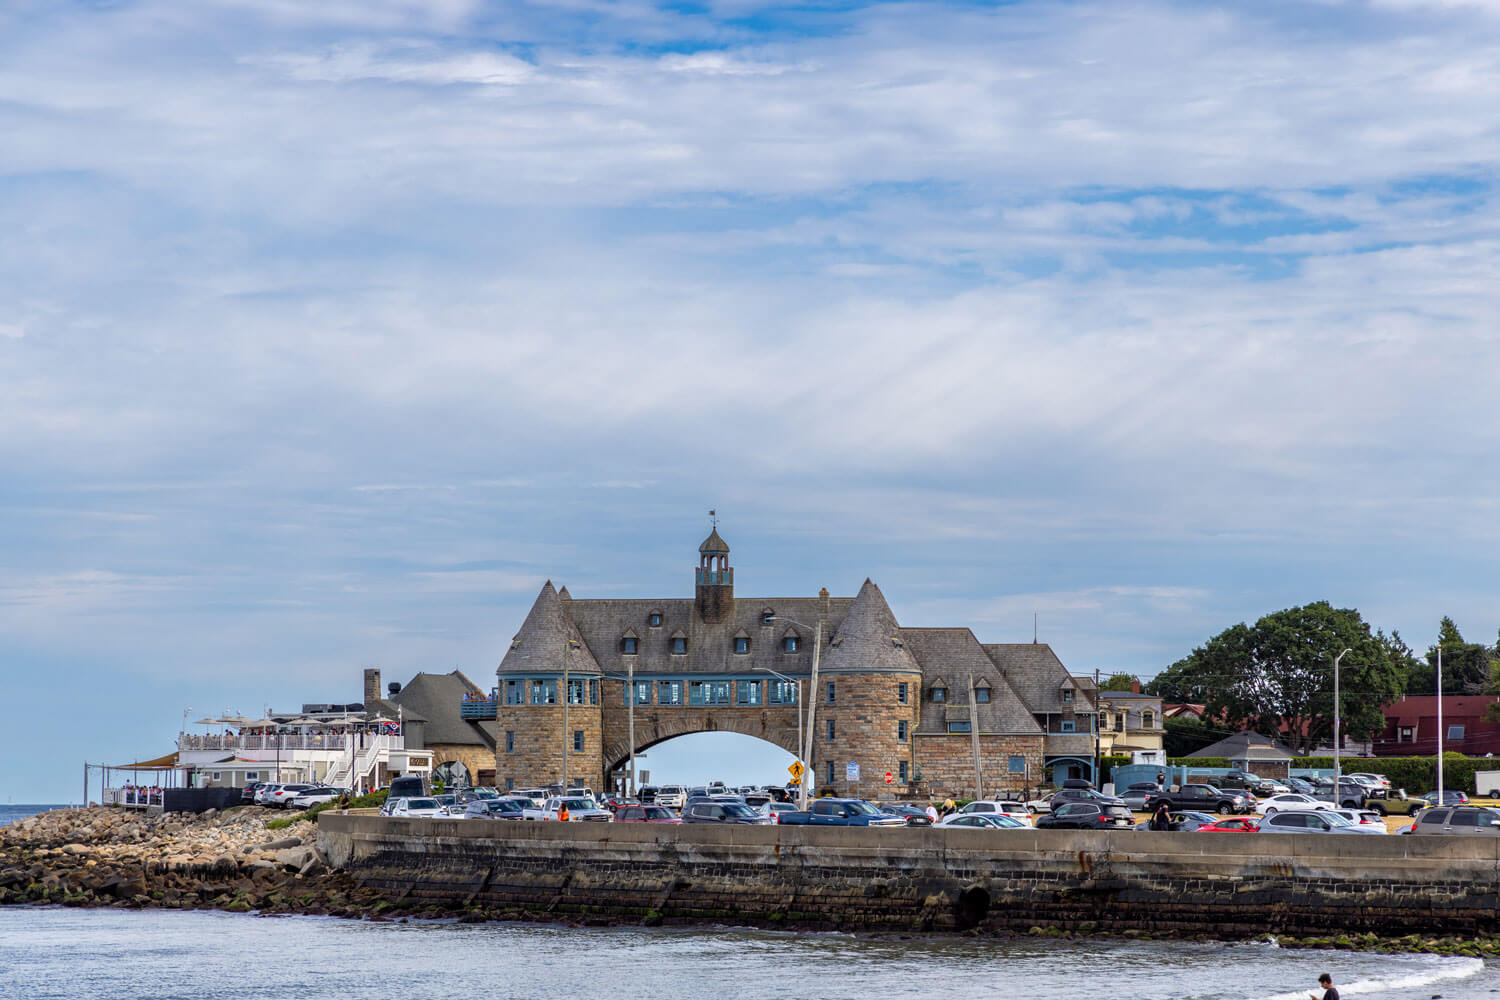 Historic stone Towers overlooking the beach in Narragansett, Rhode Island